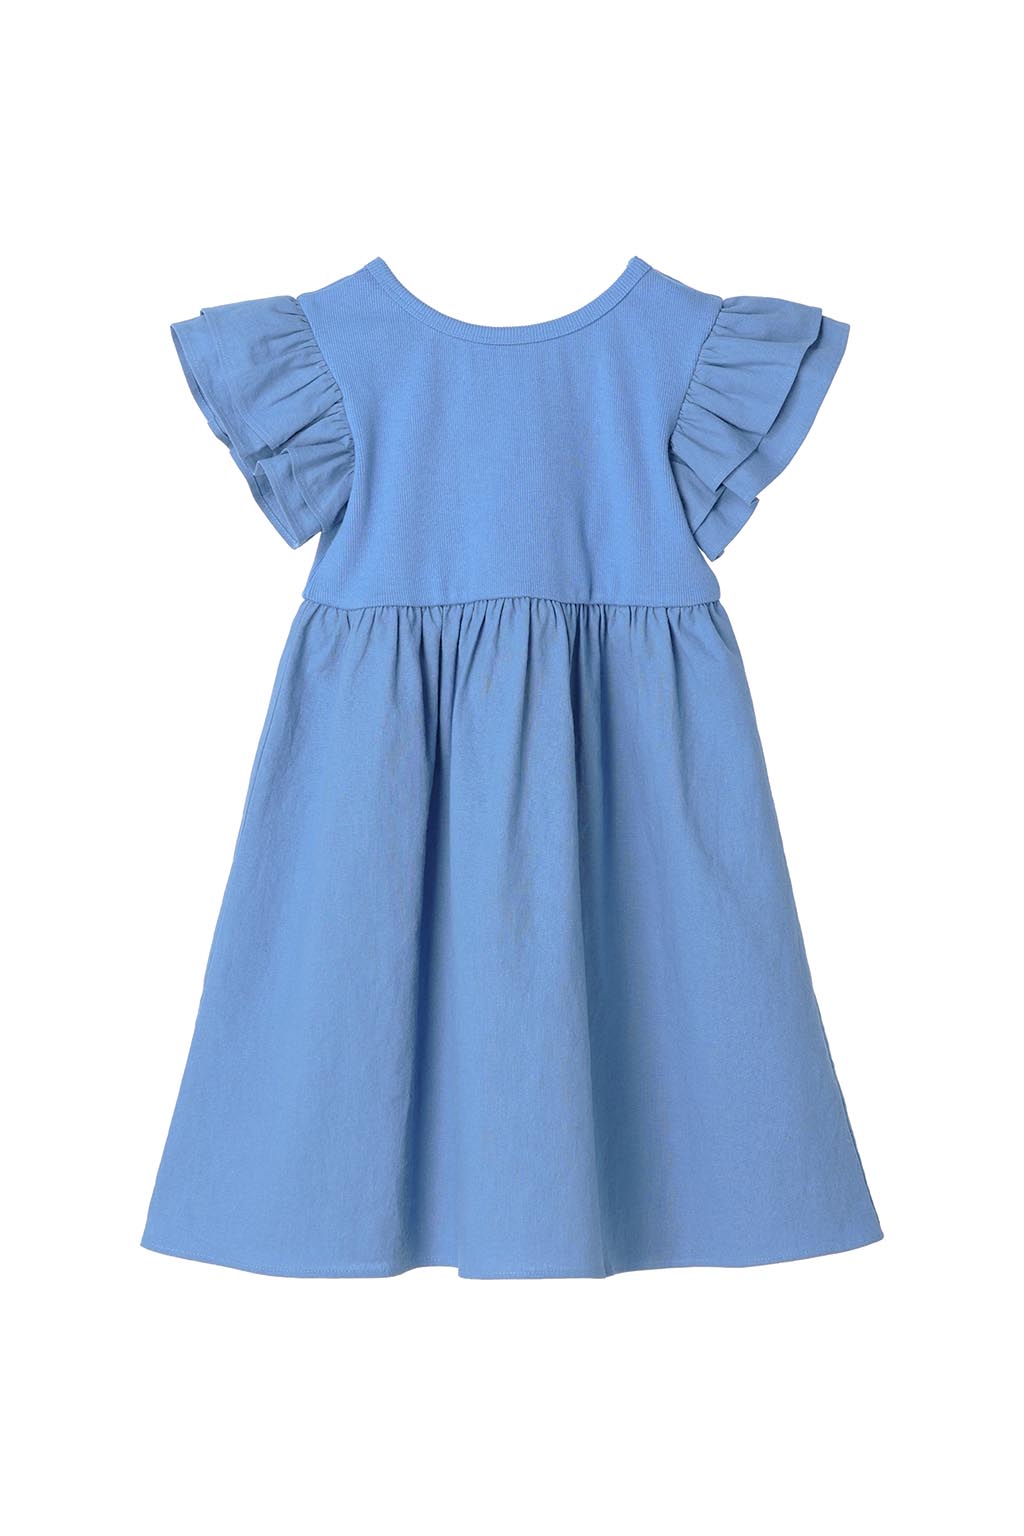 BABY ALEXIA Frill Sleeve Dress Blue9